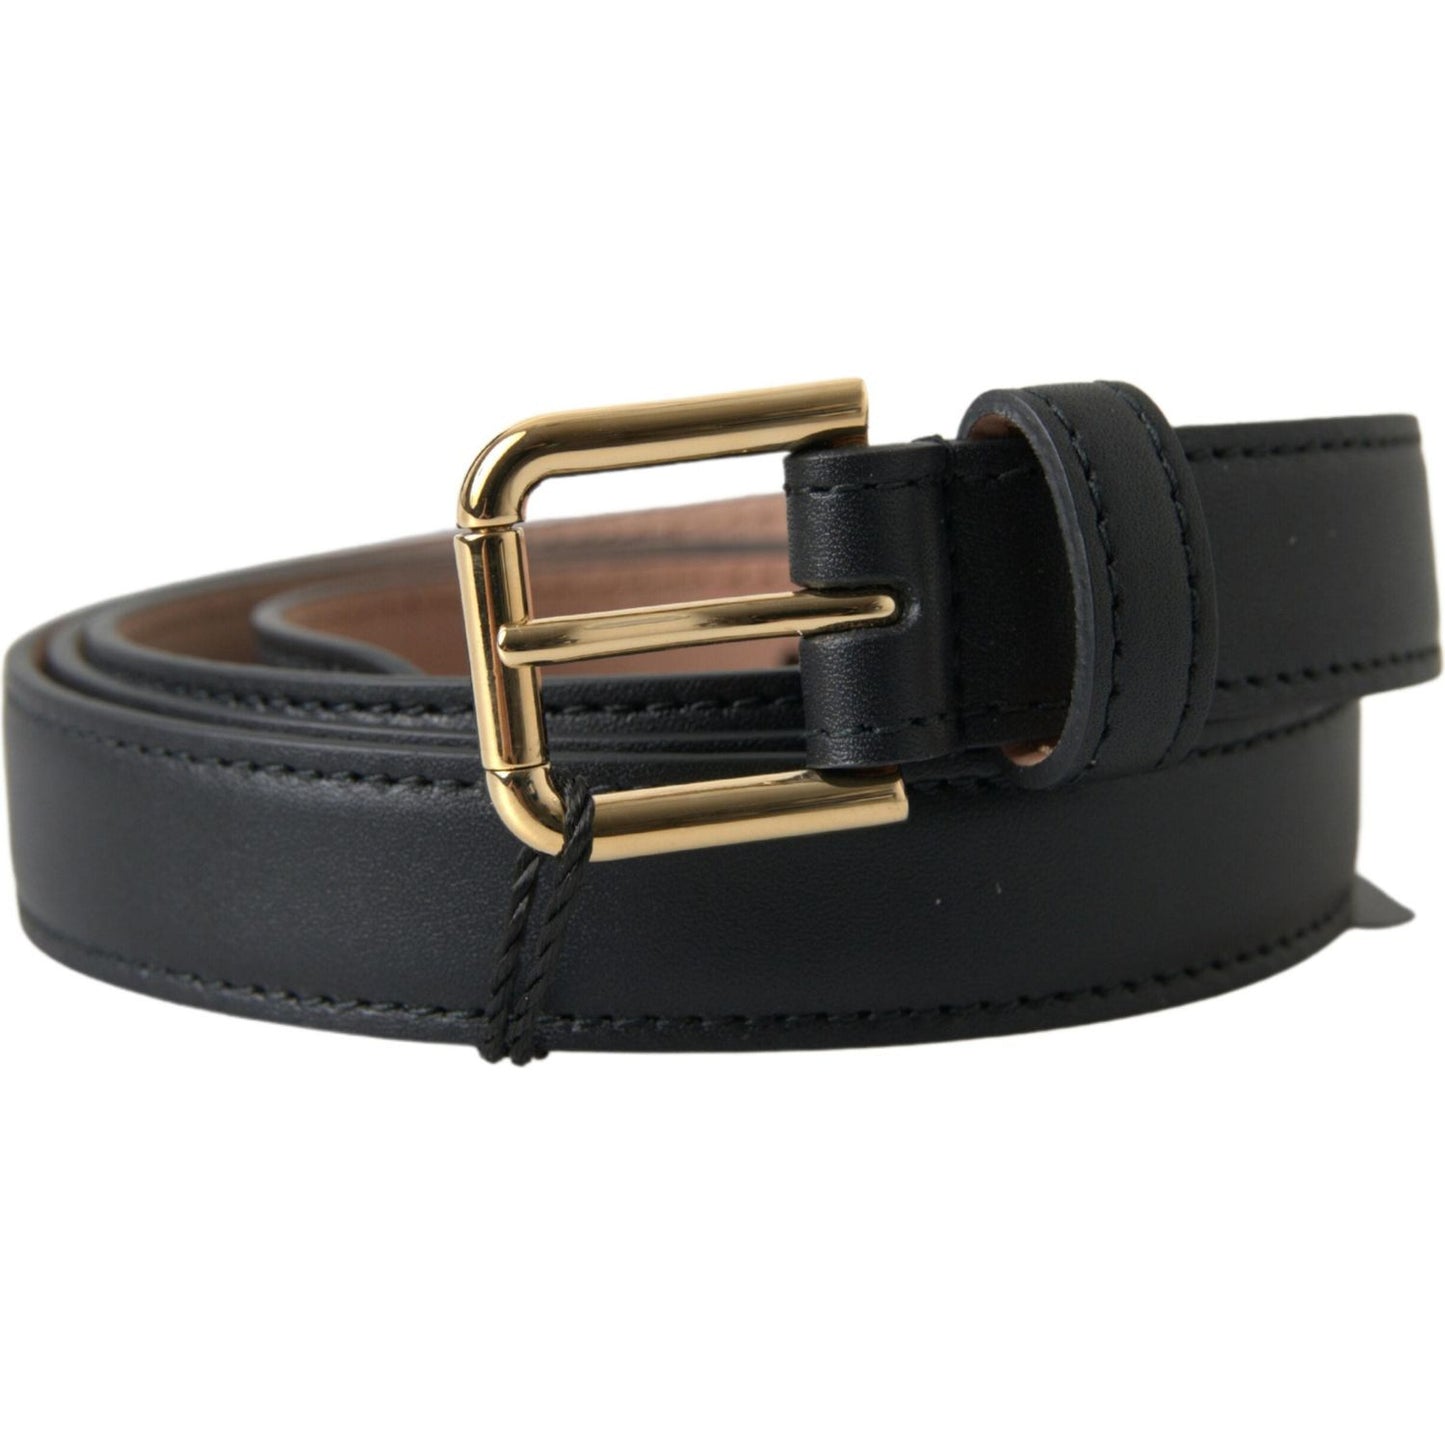 Elegant Italian Leather Belt with Metal Buckle Dolce & Gabbana